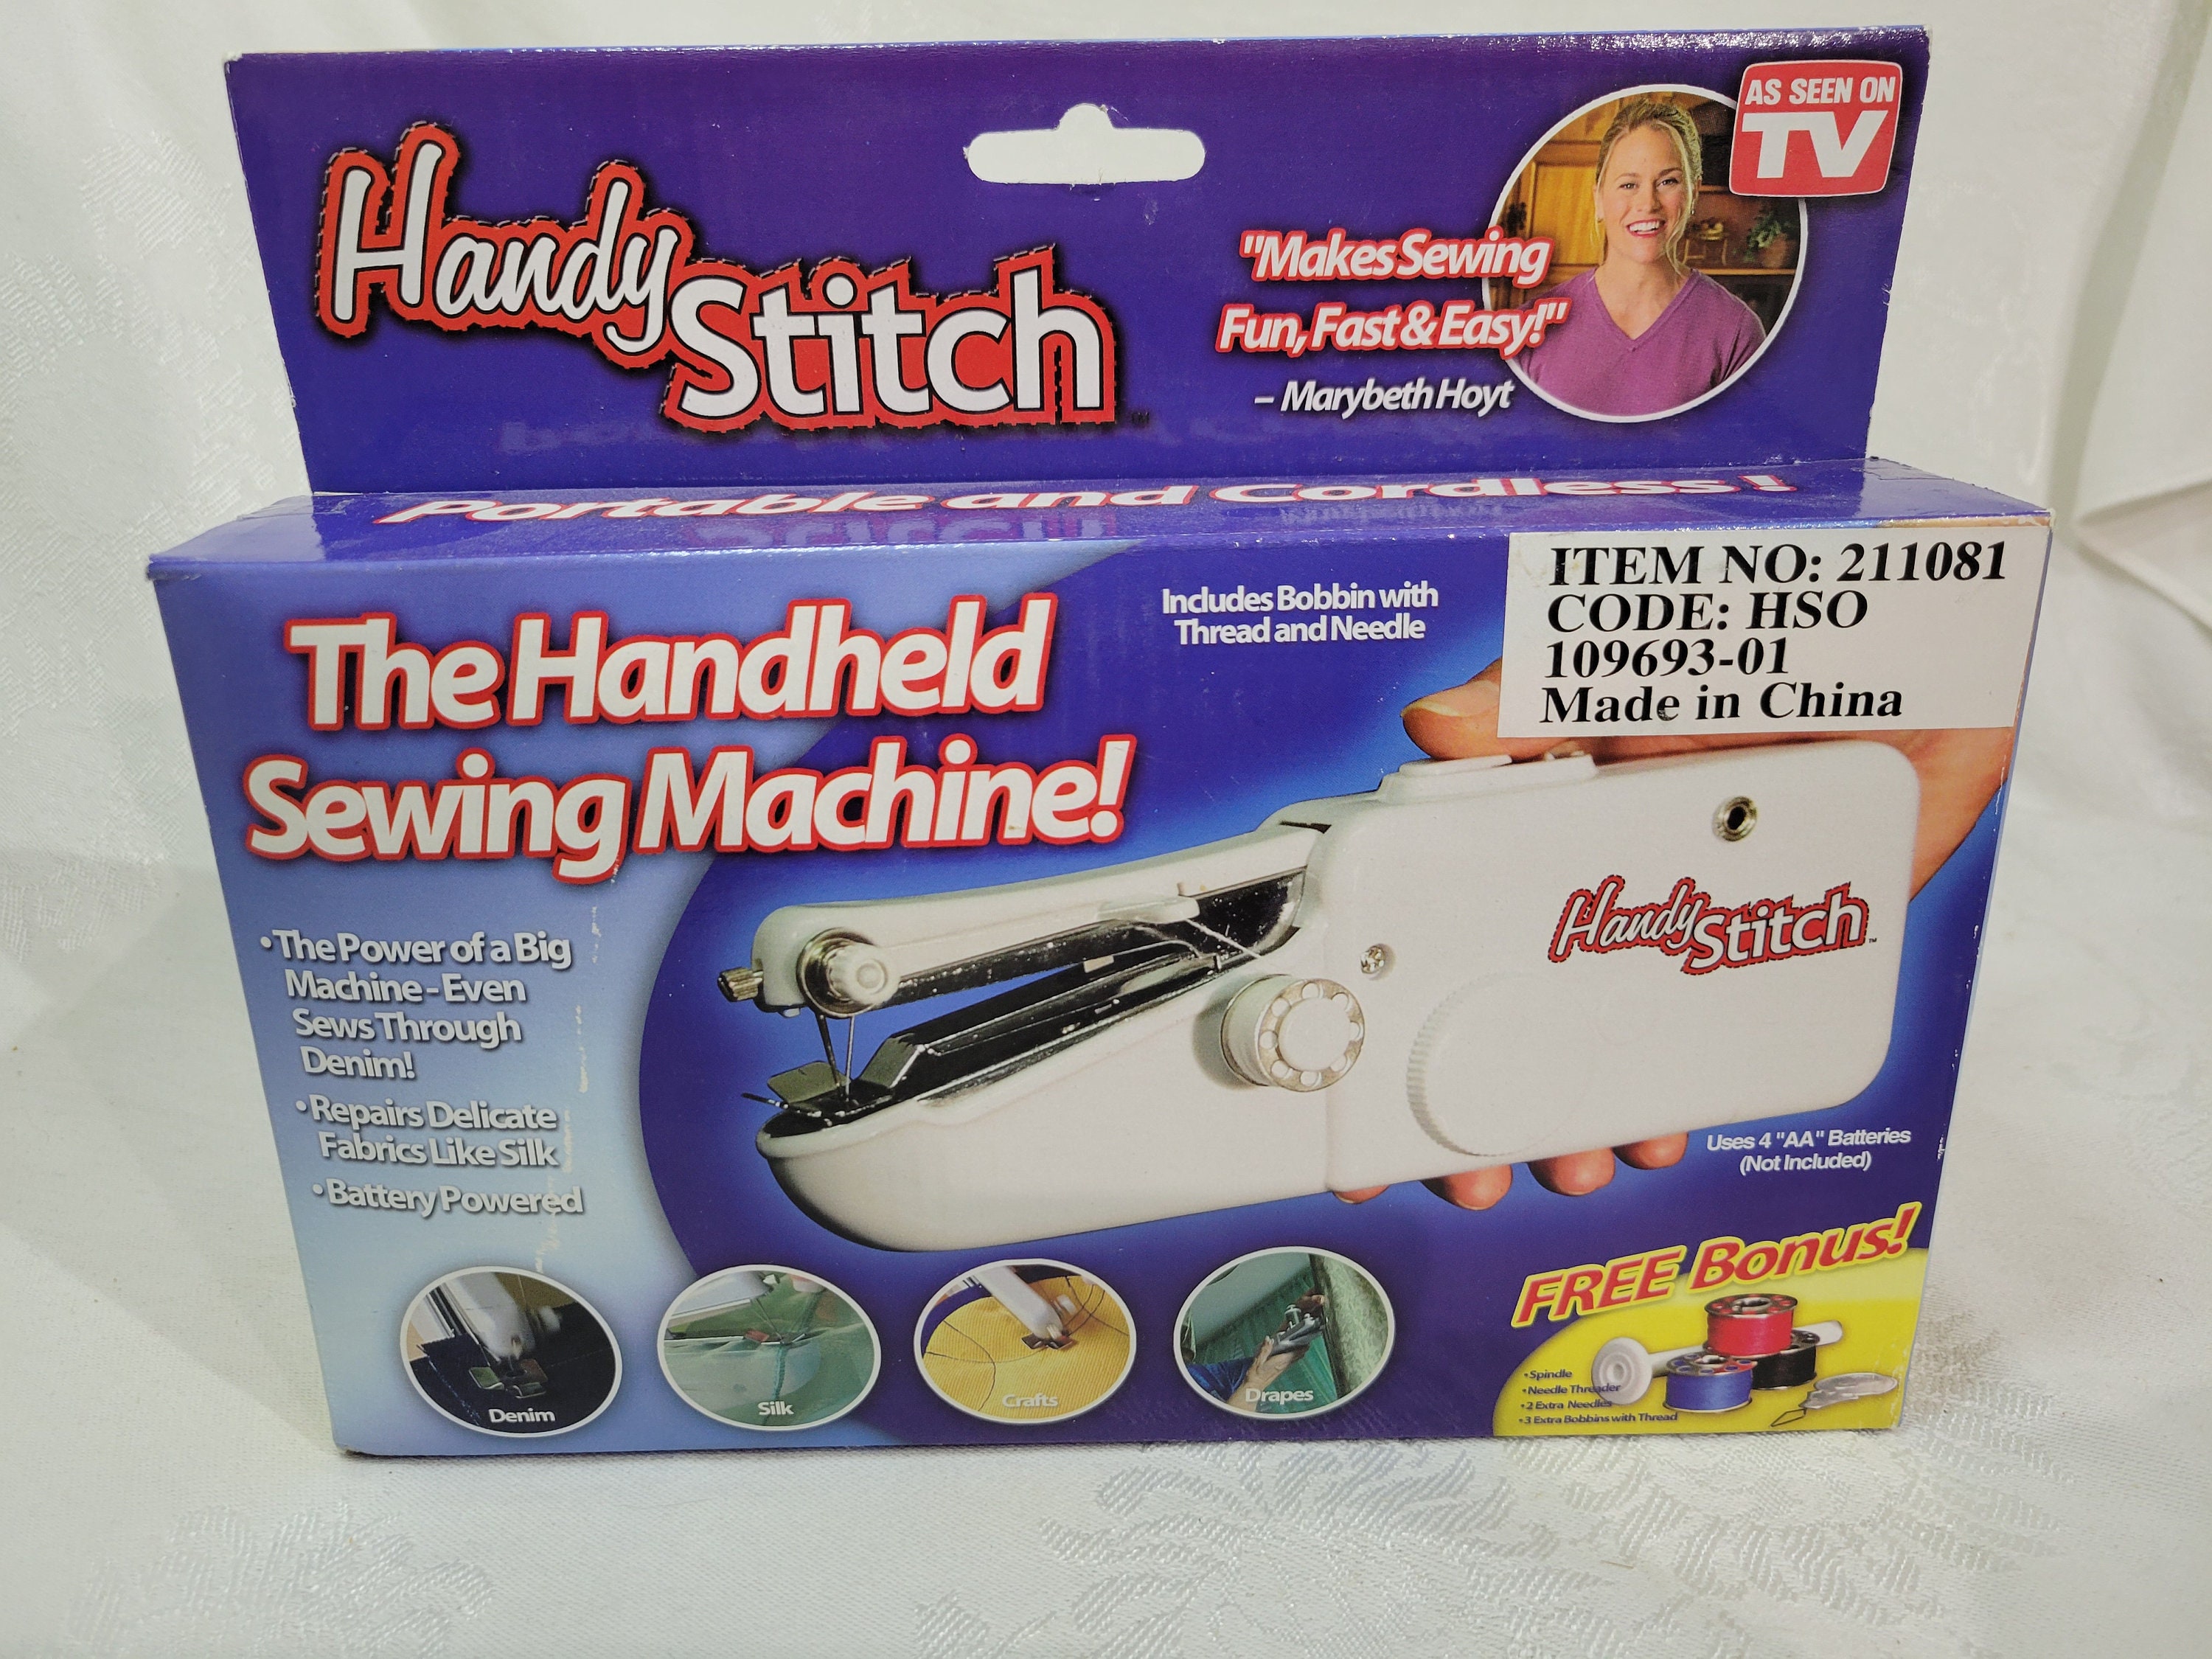 Handy Stitch Bundle Including Handheld Sewing Machine, Spindles